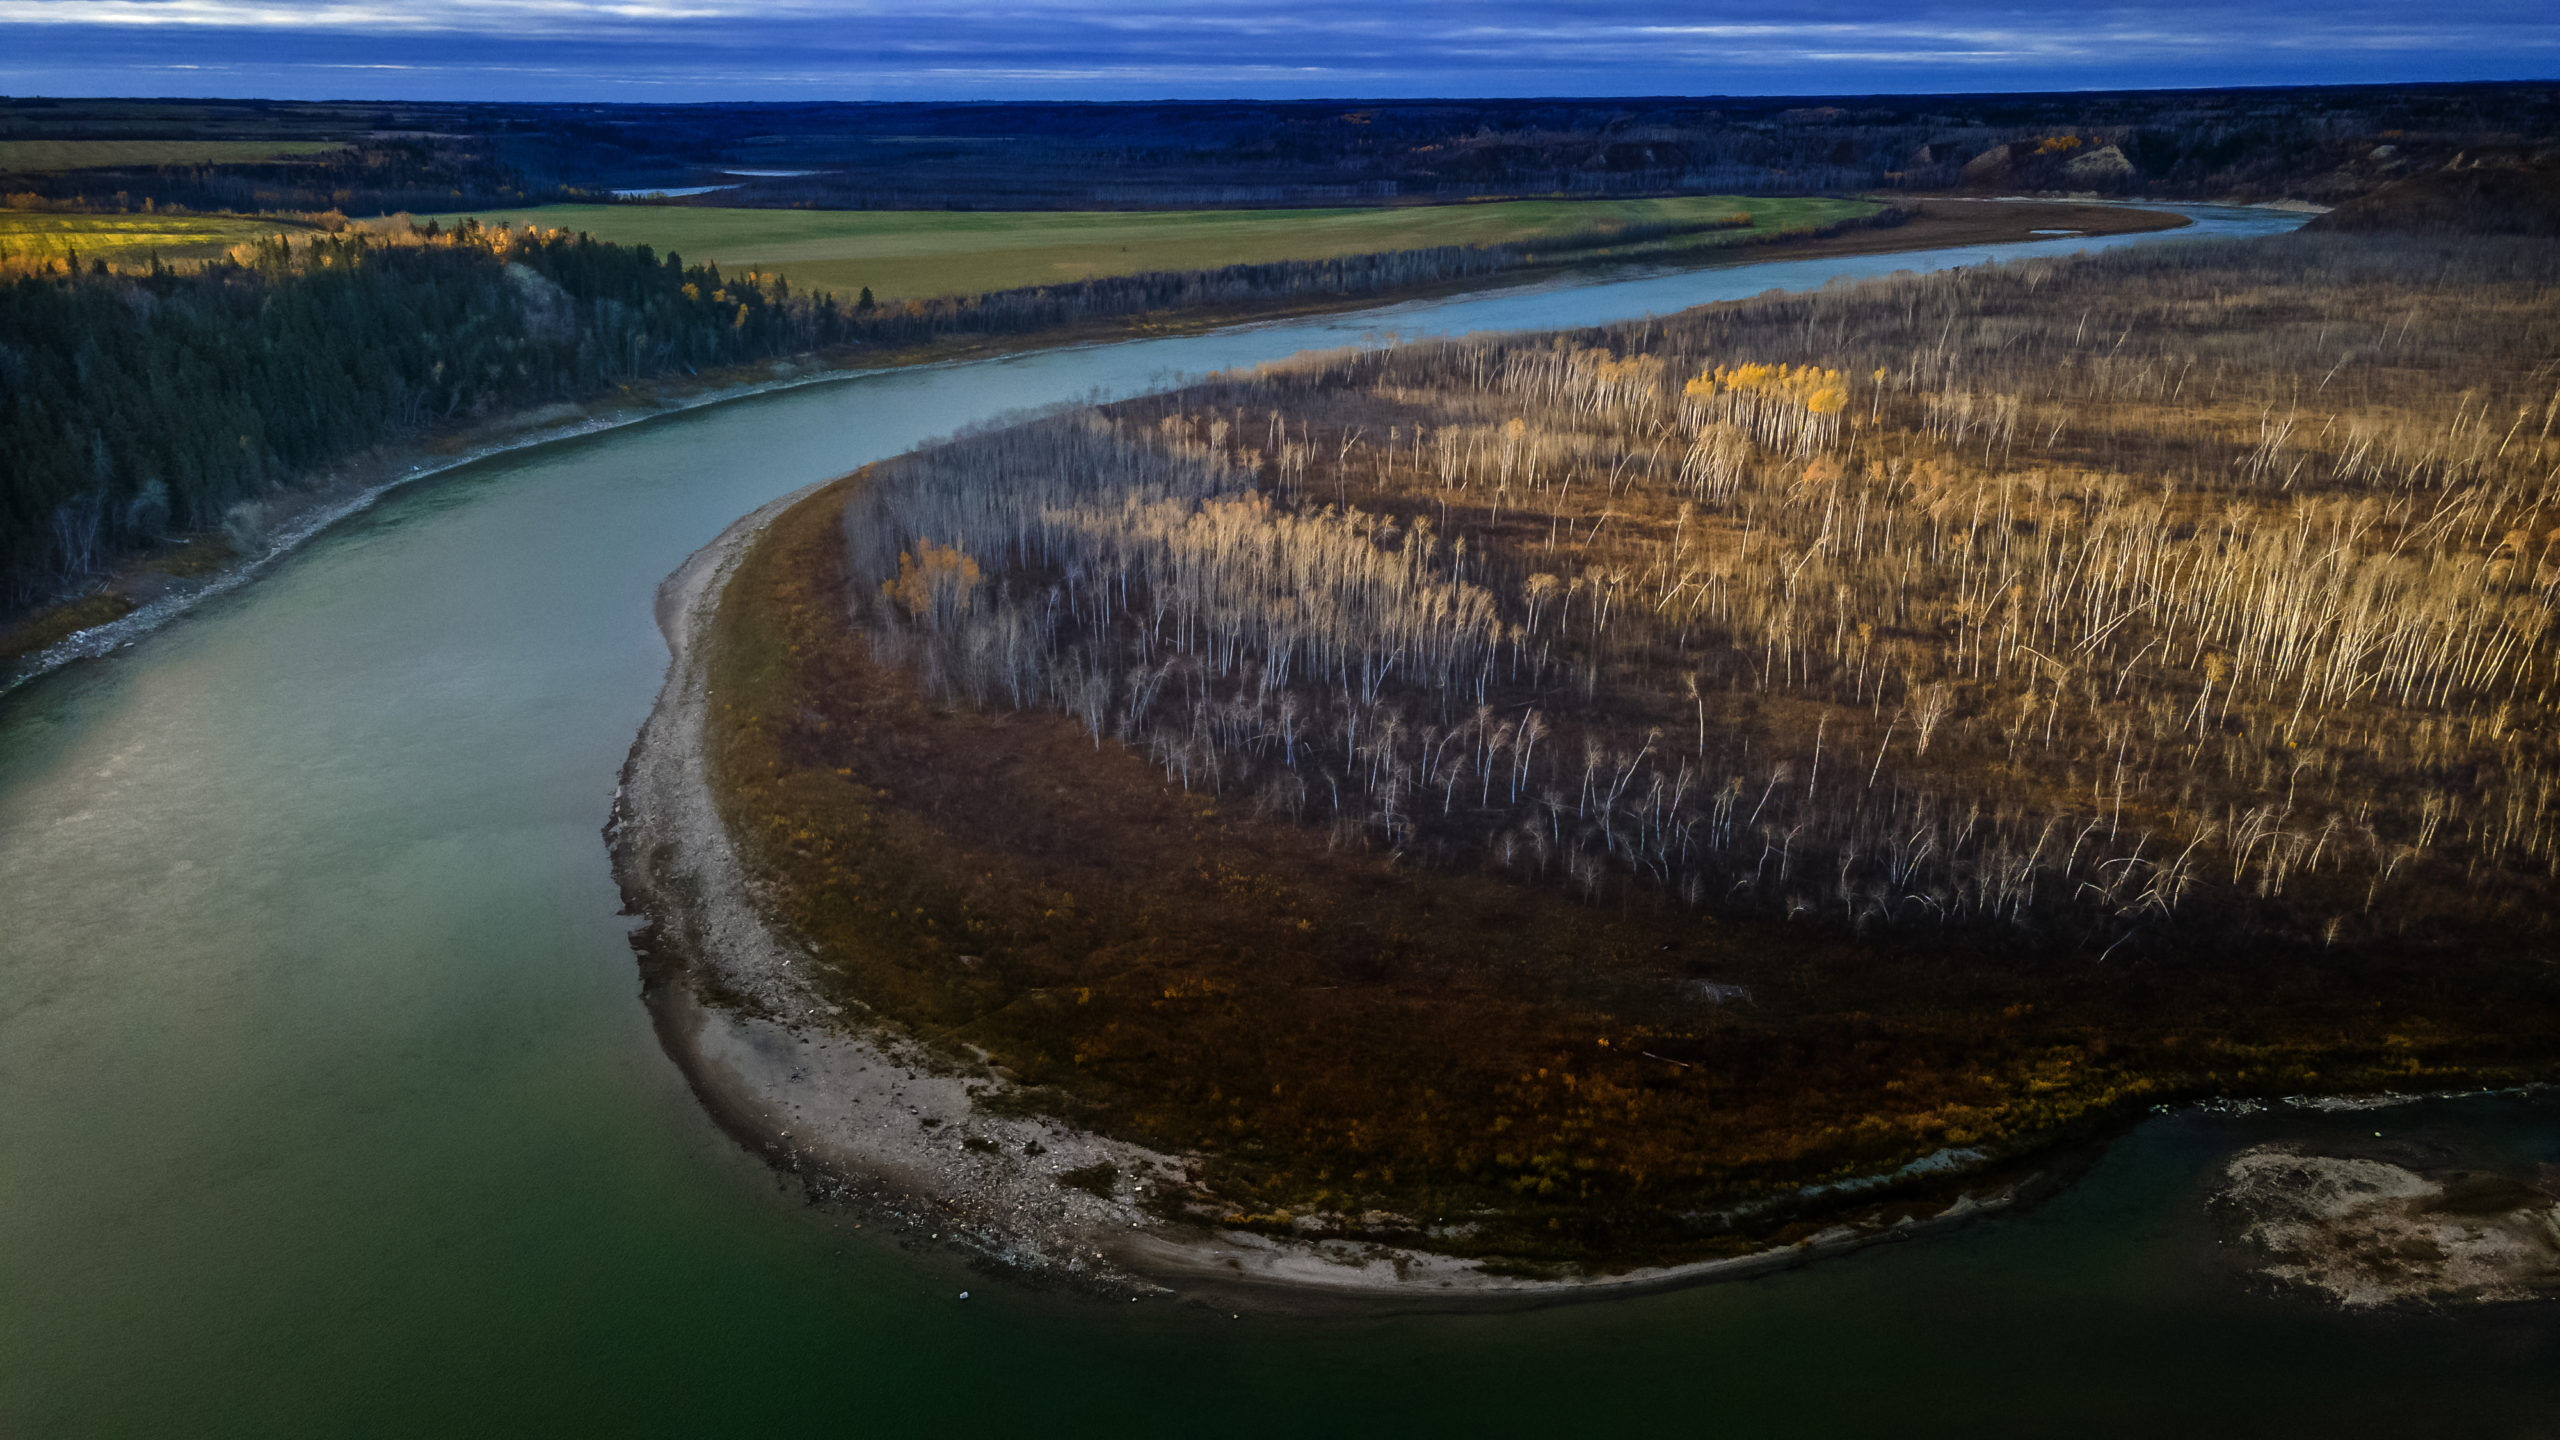 The curve of the North Saskatchewan River